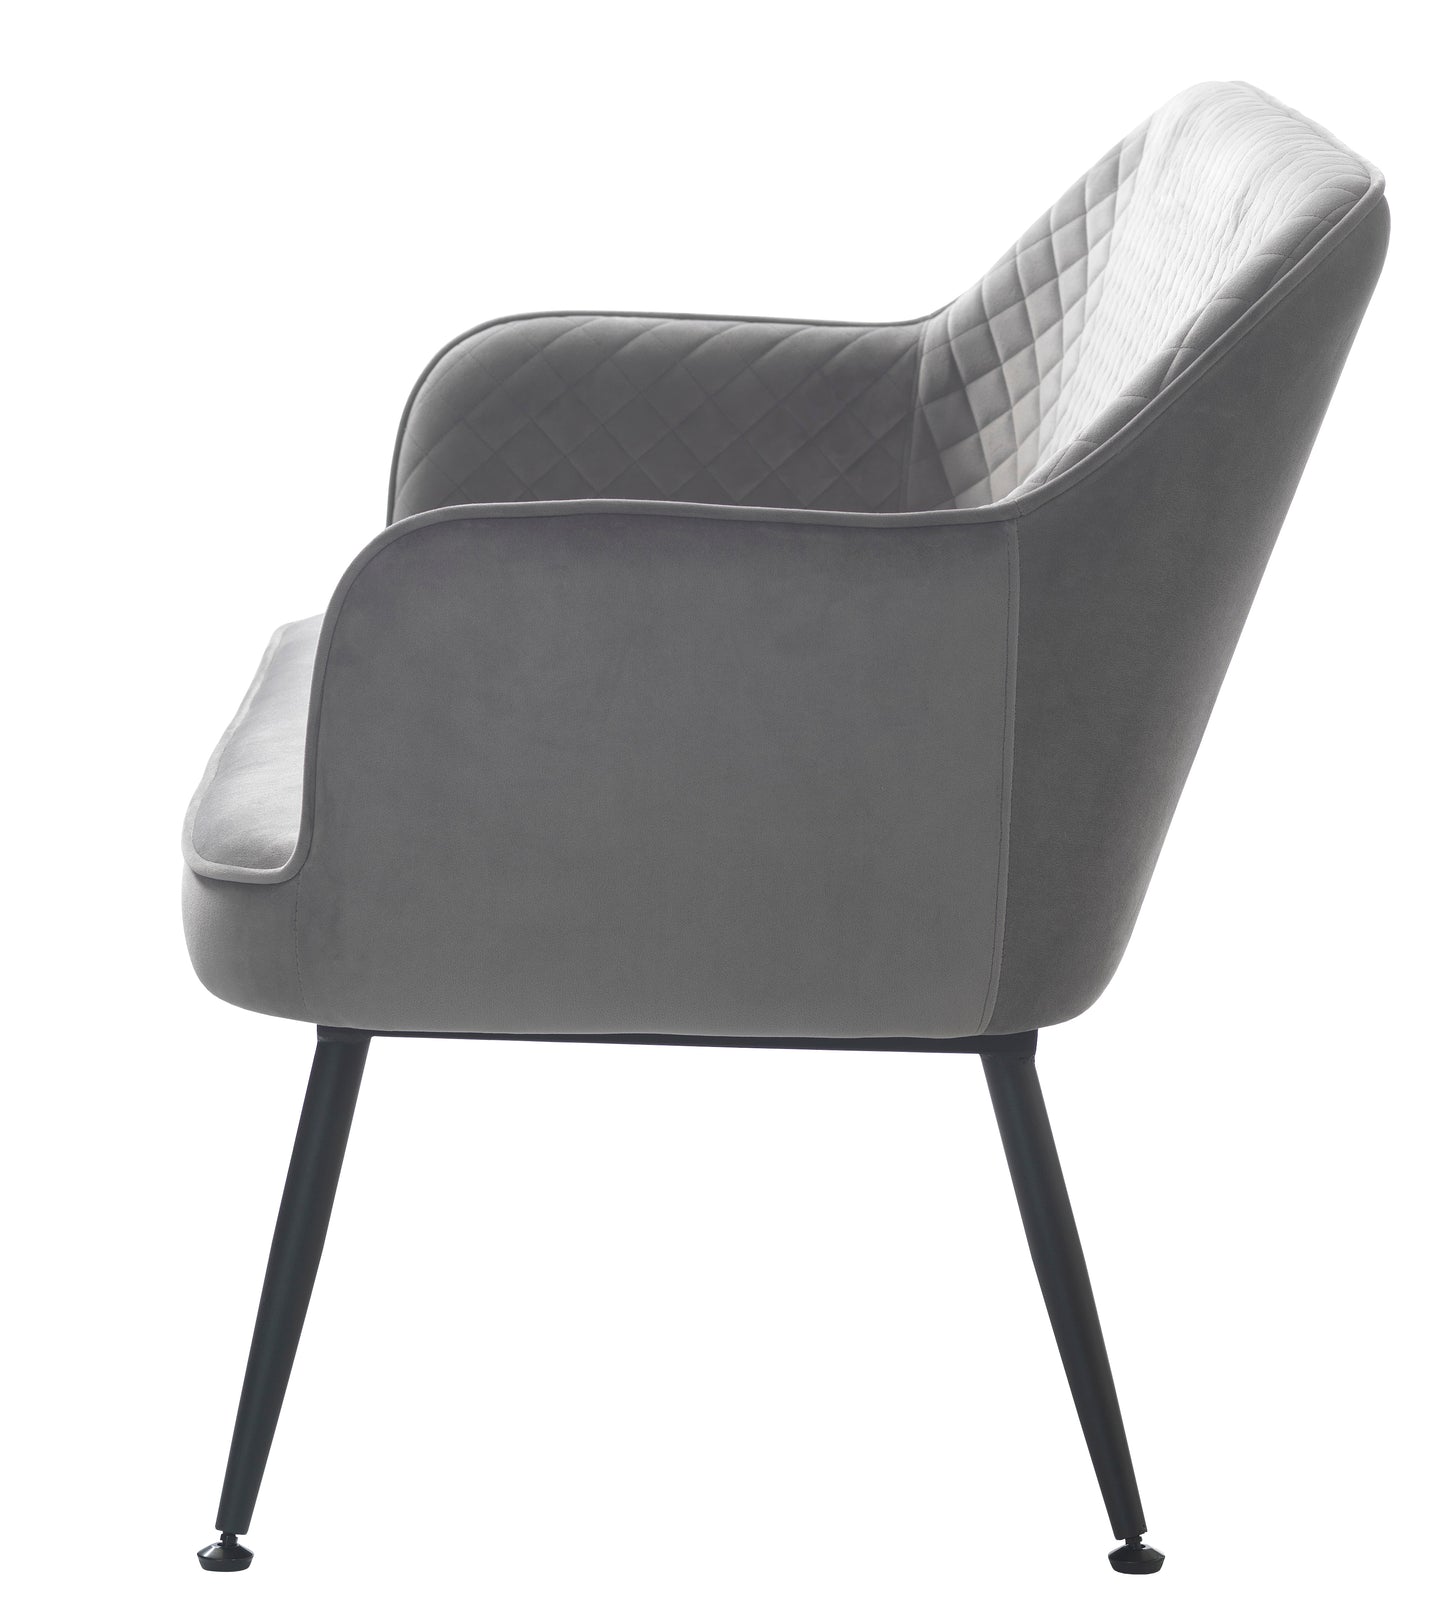 Einzigartige Möbel | Berrie Lounge Sofa - Grau